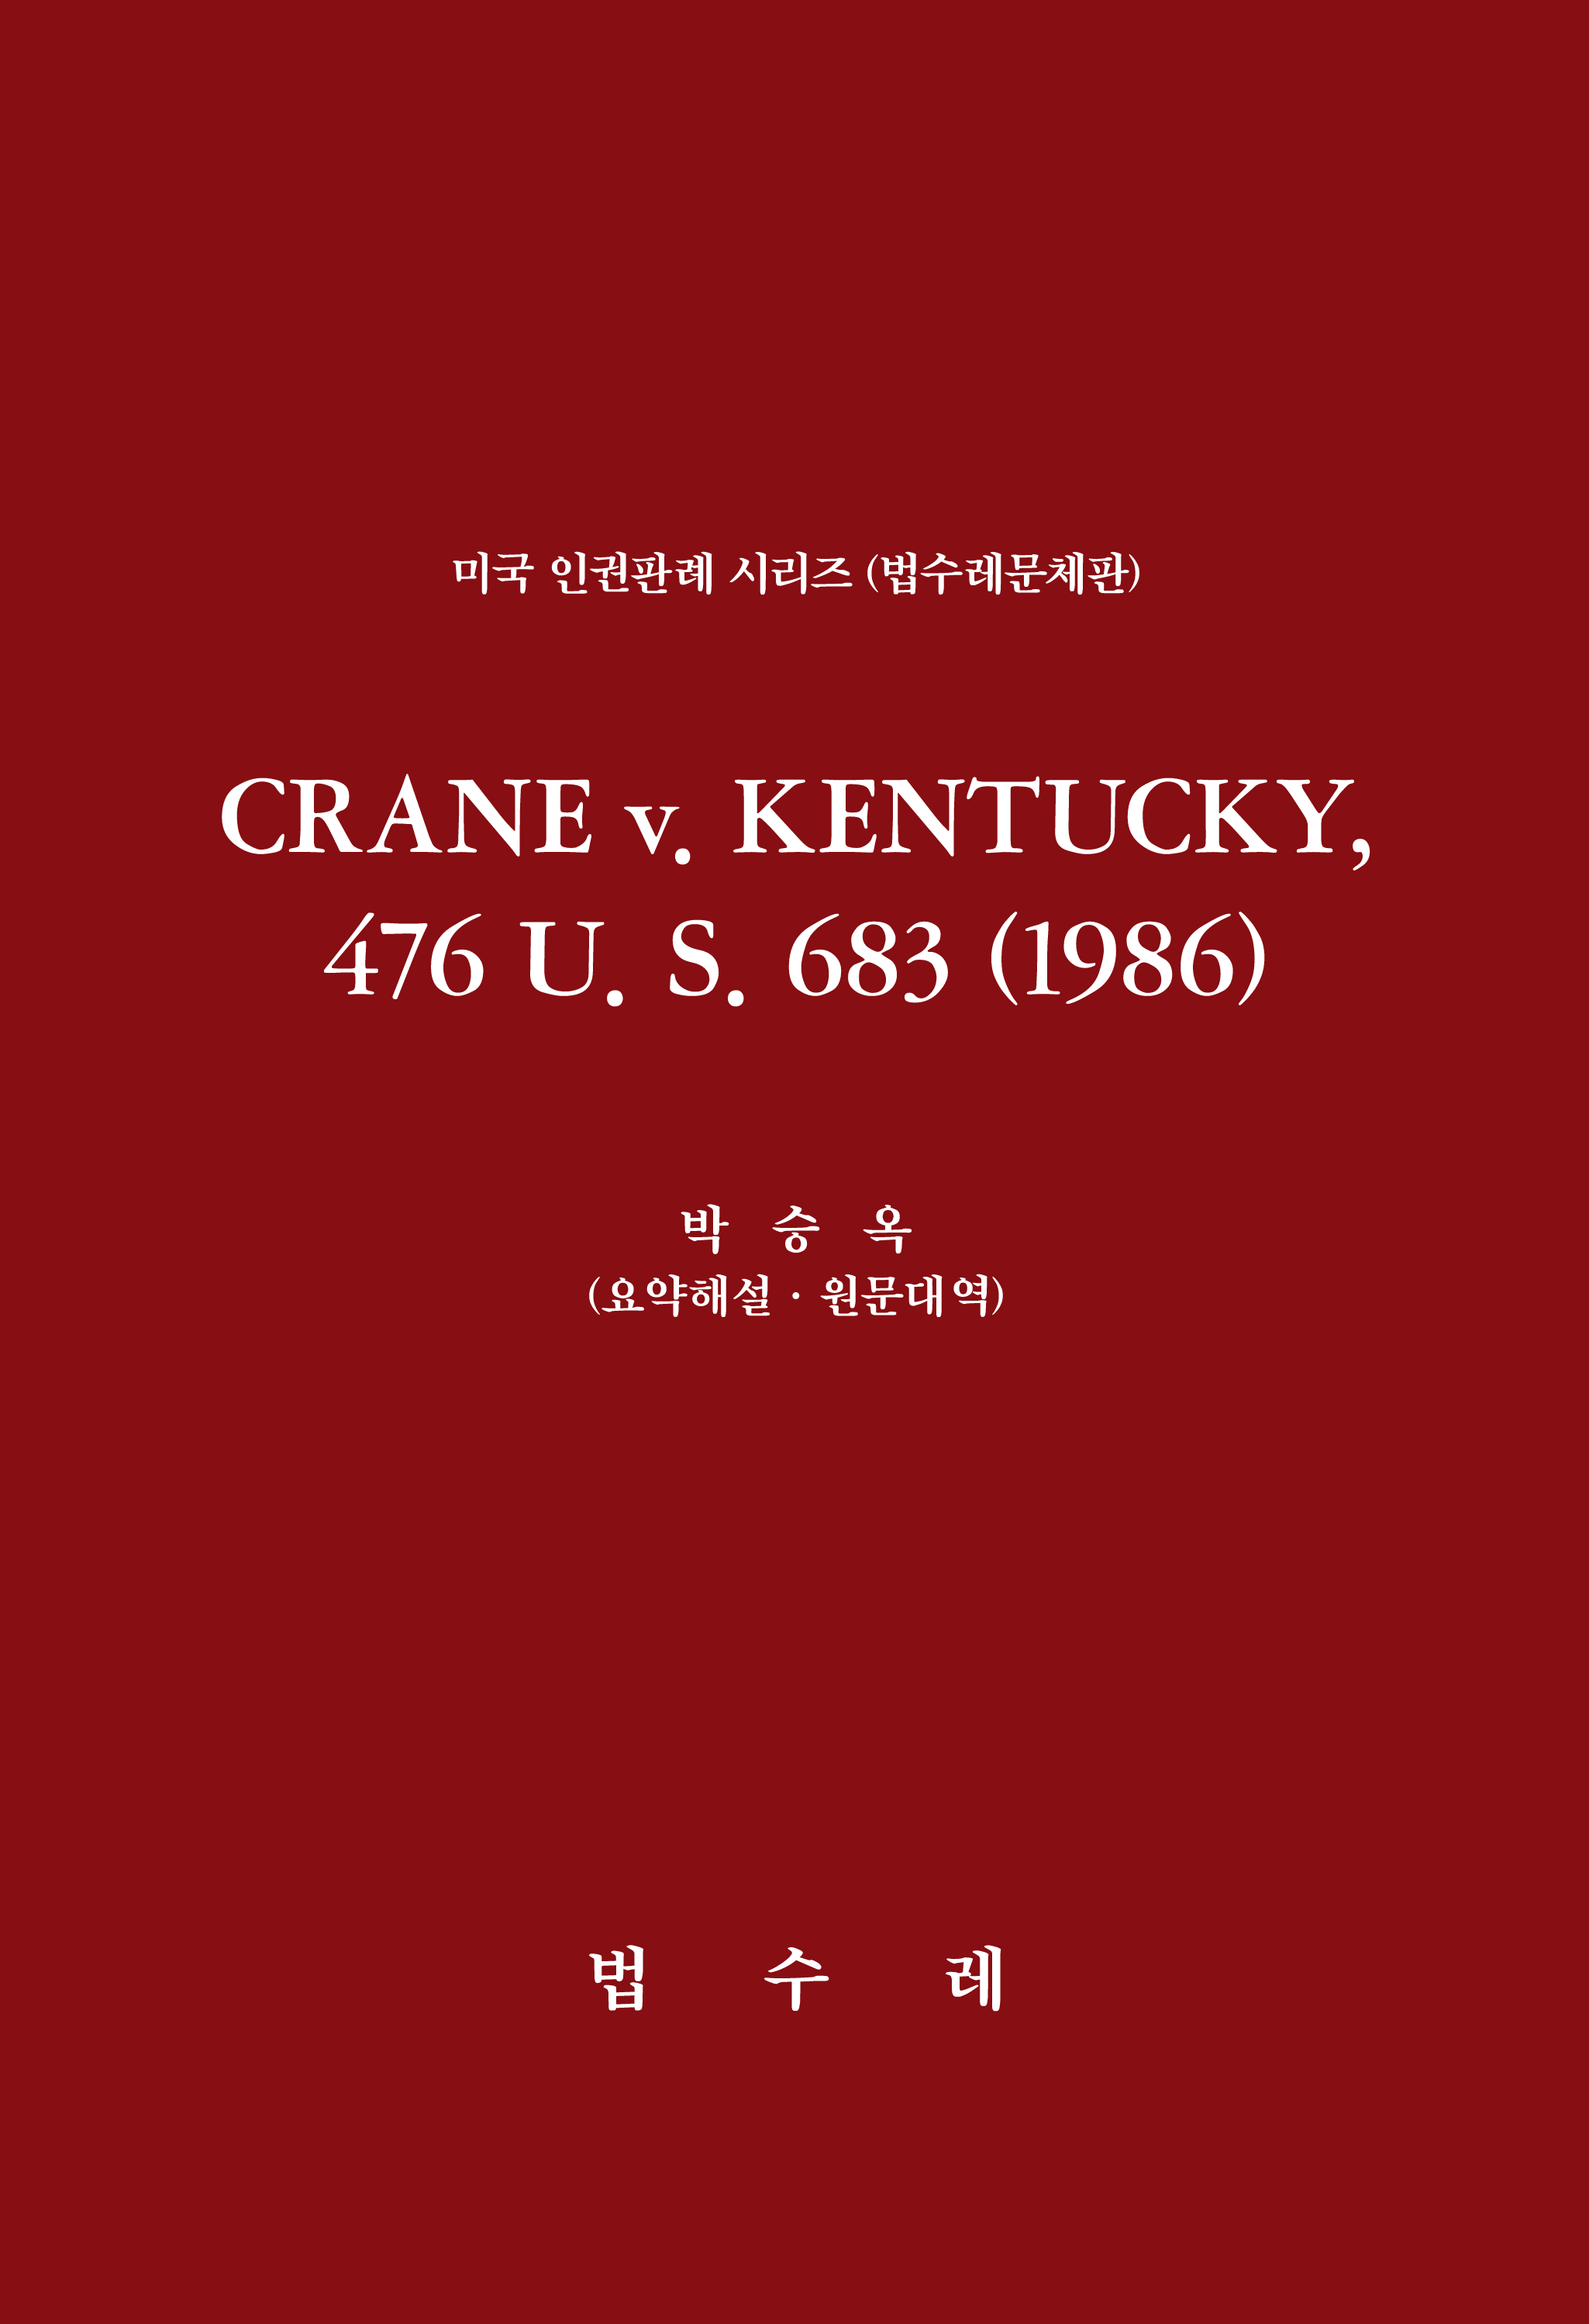 CRANE v. KENTUCKY, 476 U. S. 683 (1986)